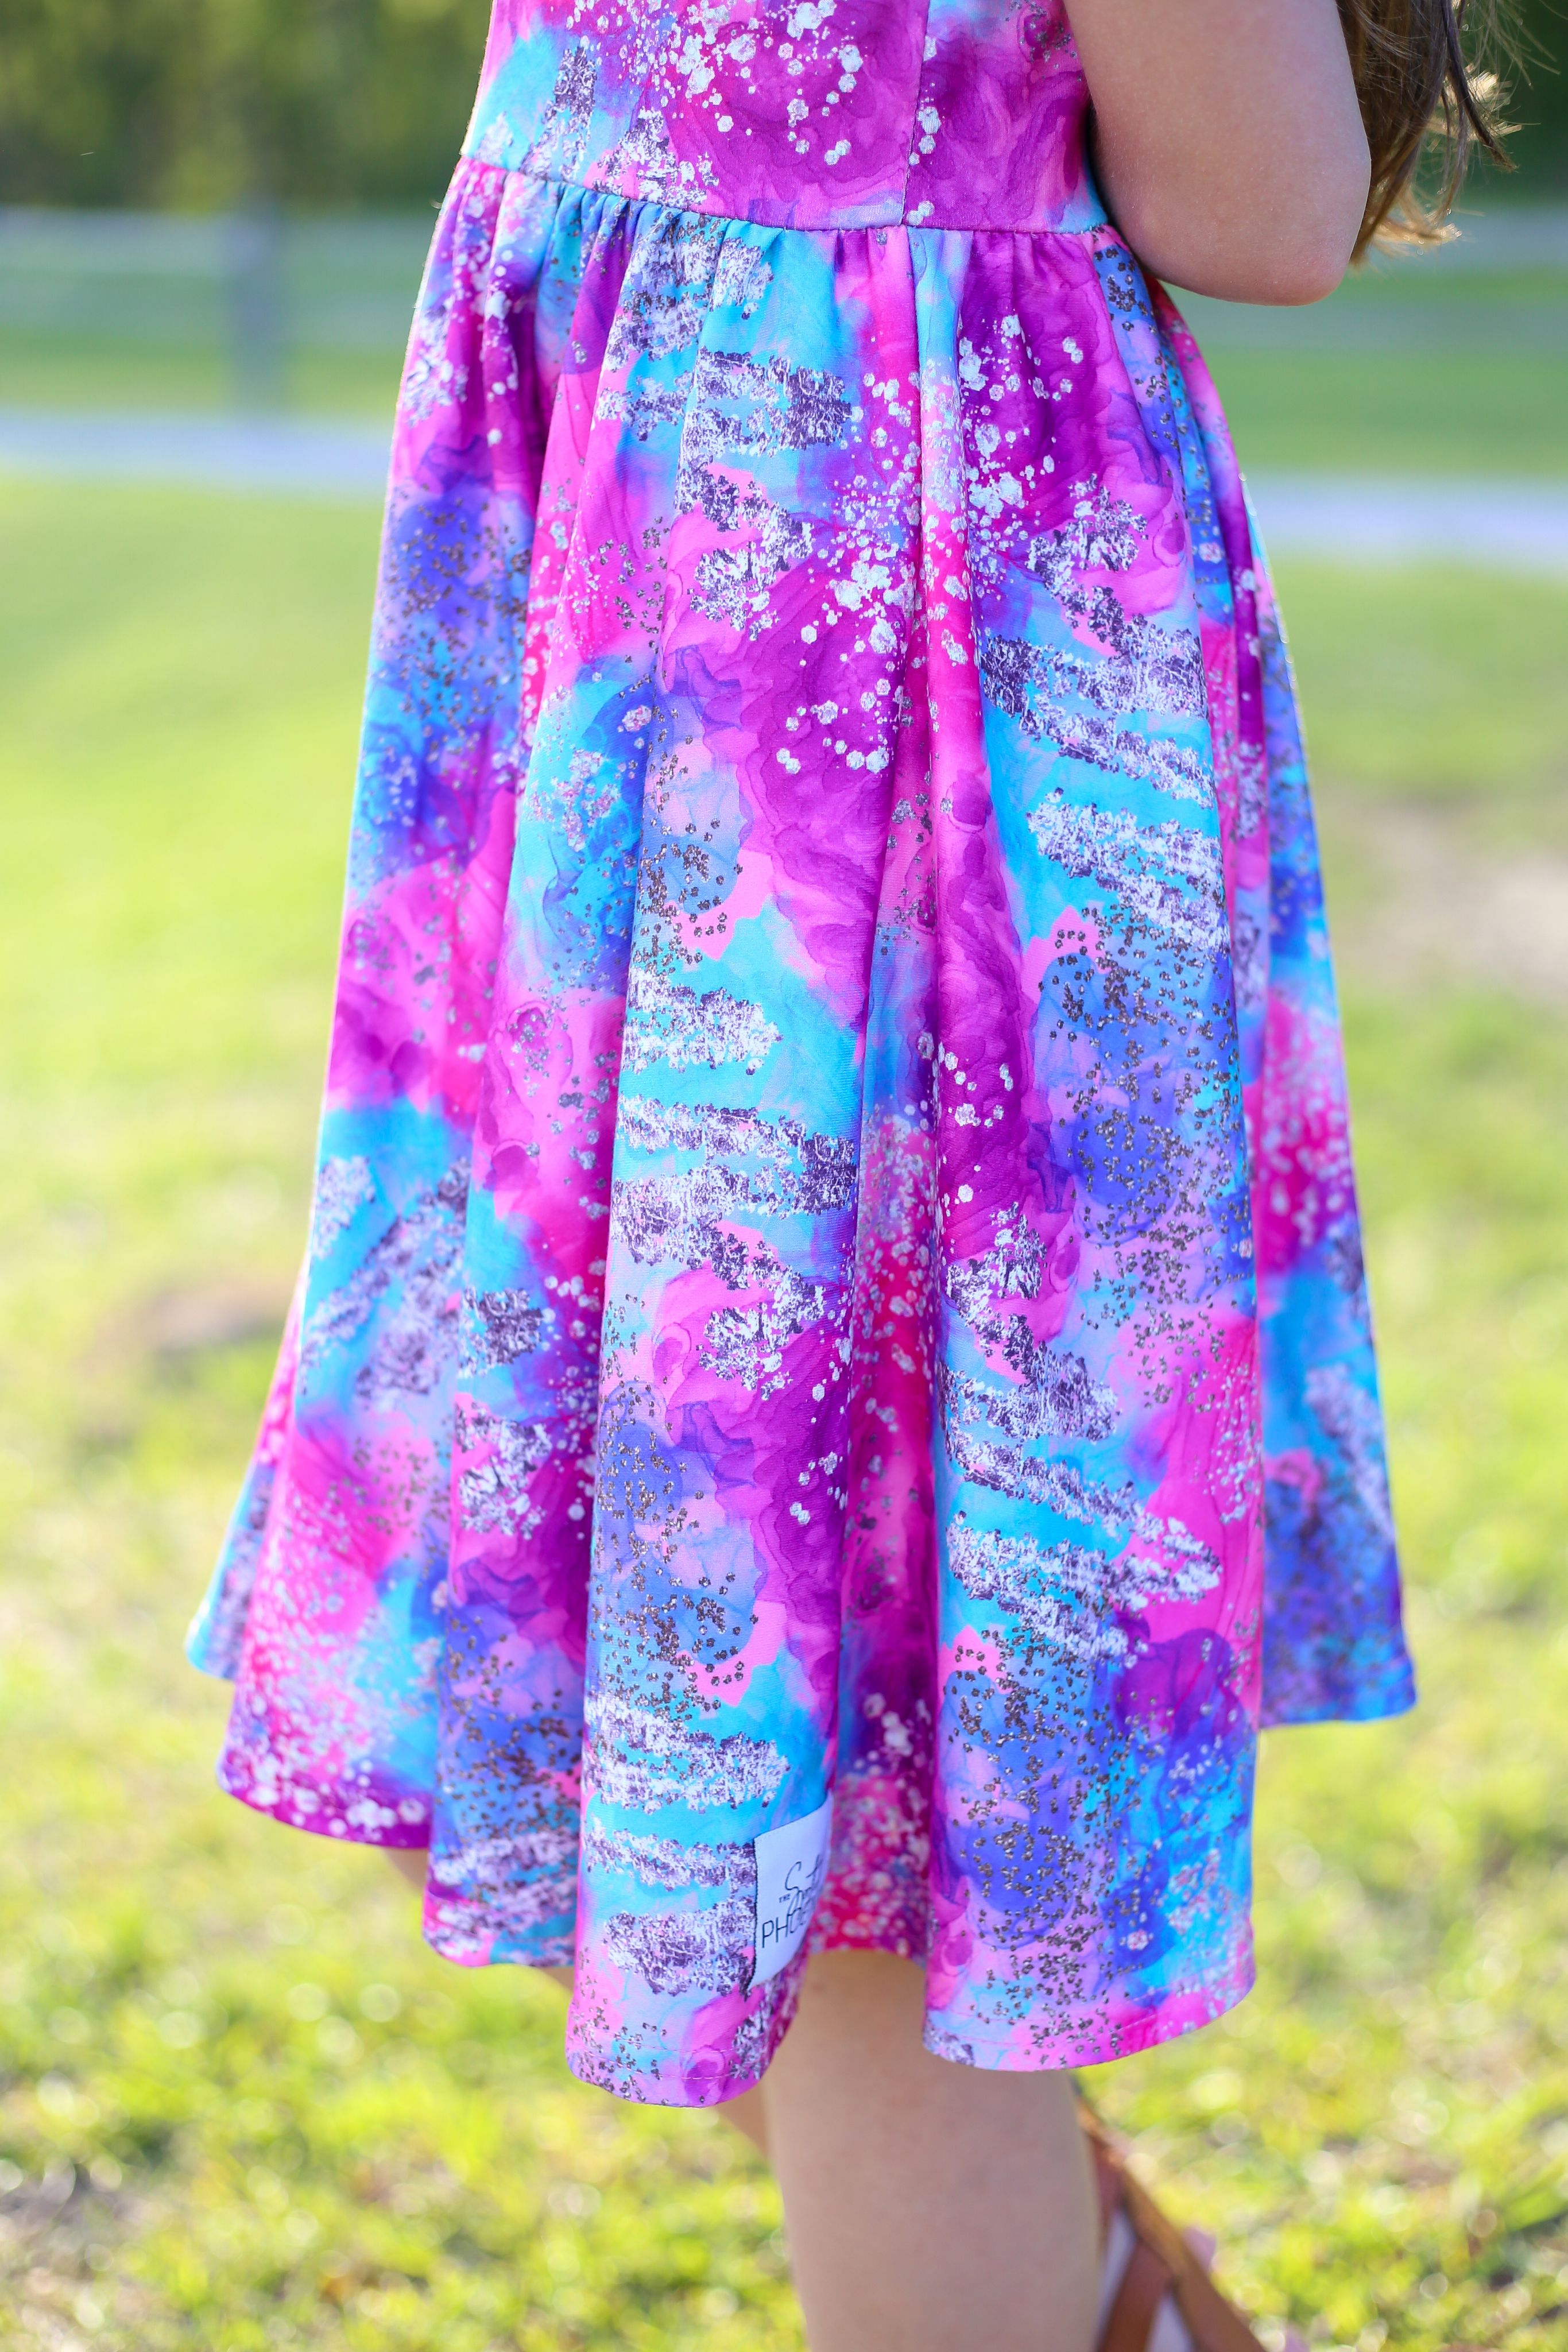 [Pop Star]Twirl Dress w/ Faux Glitter